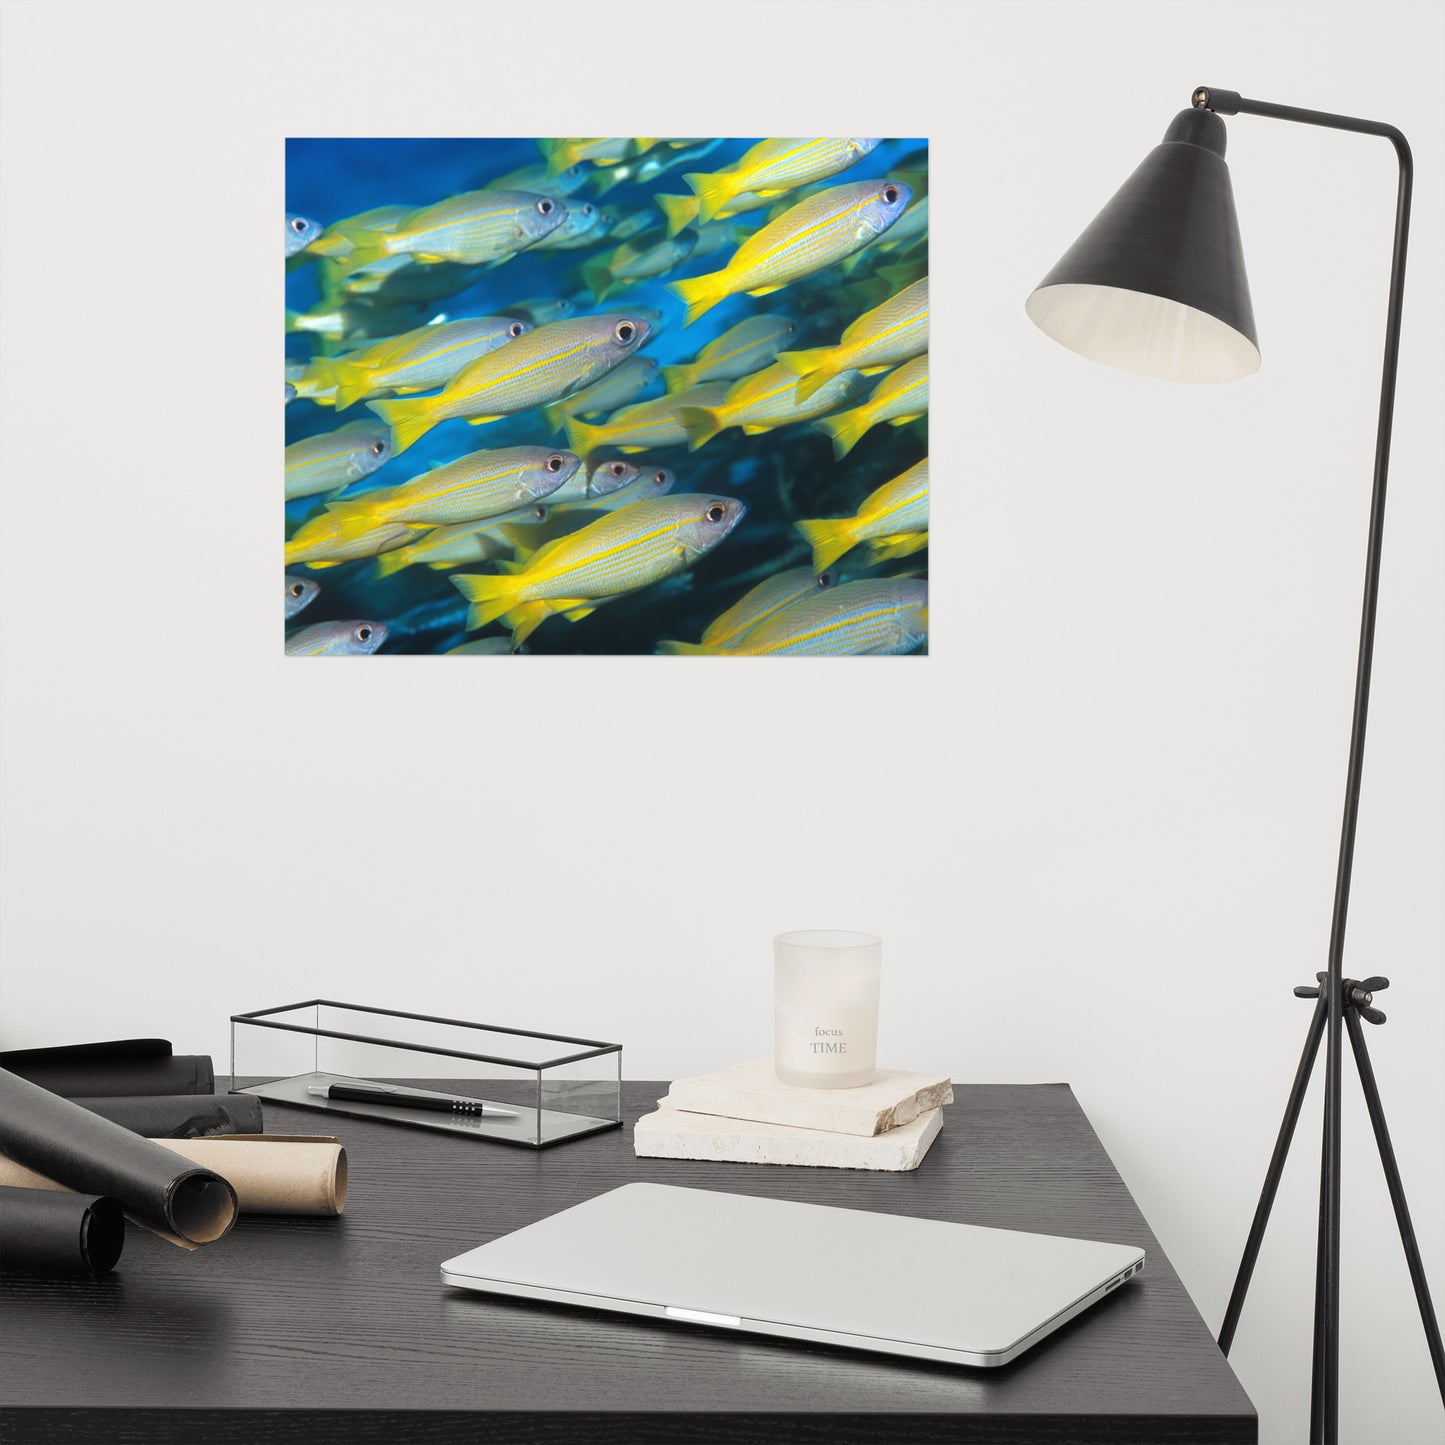 School of Yellow Tropical Fish in Blue Ocean Water Animal Wildlife Photograph Loose Wall Art Print